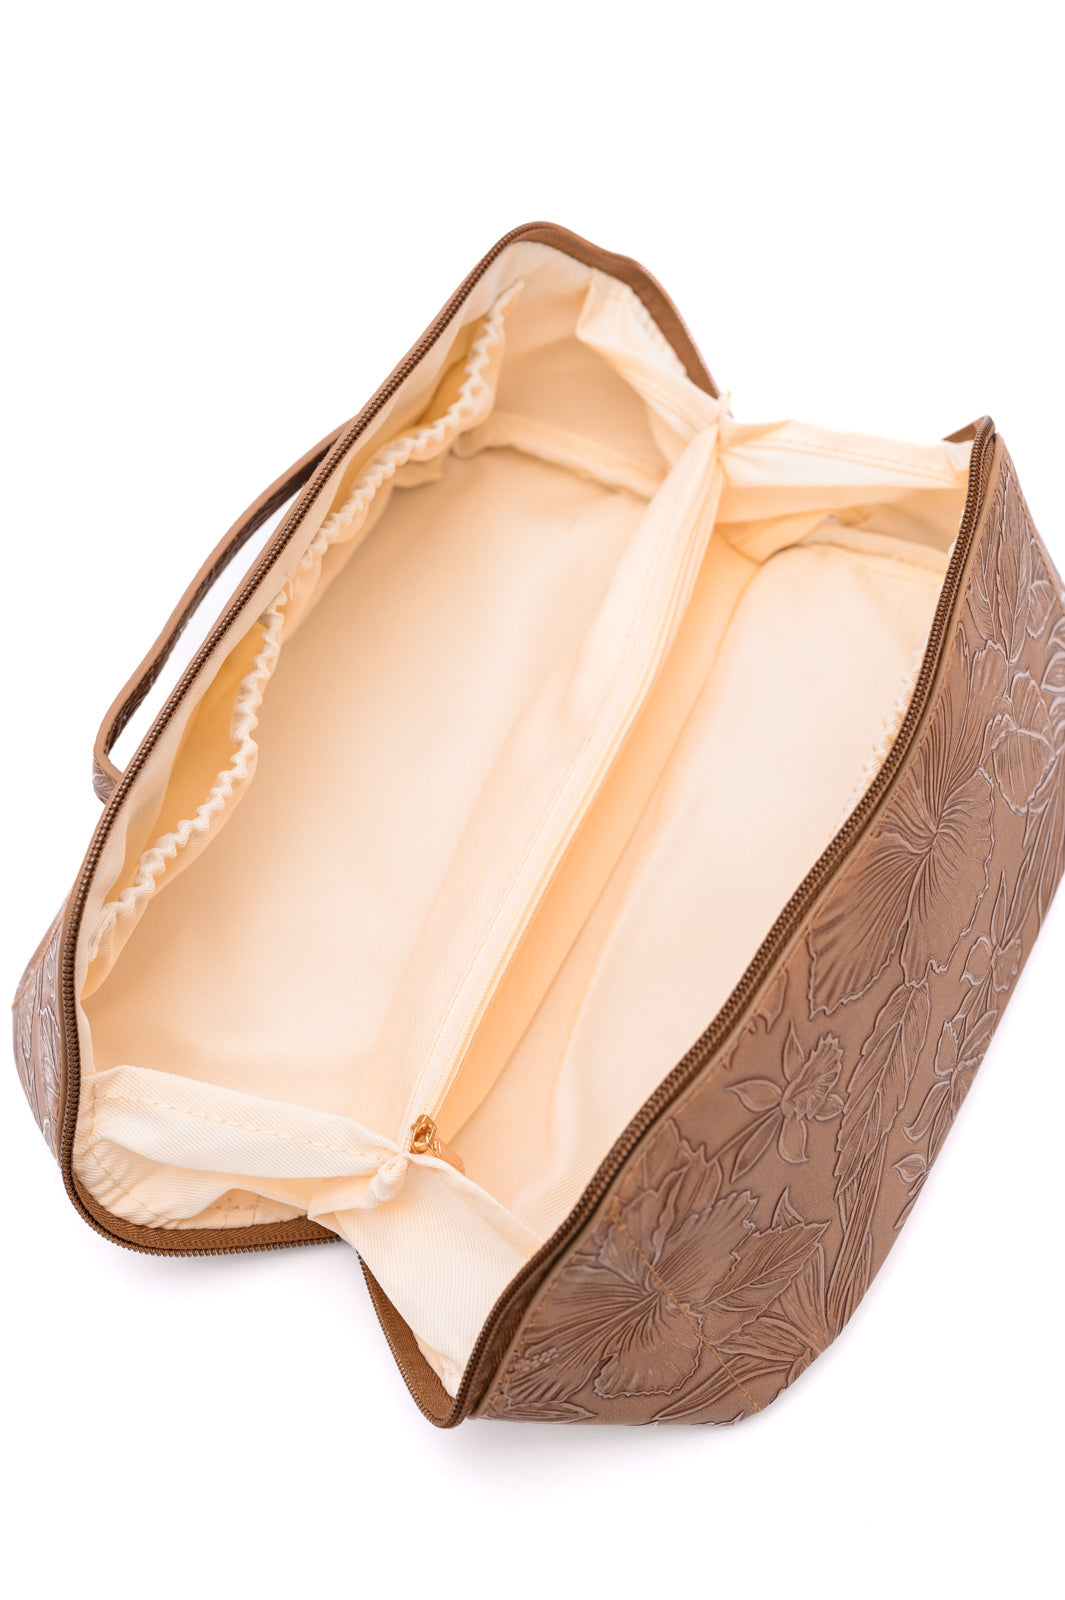 ONLINE EXCLUSIVE Life In Luxury Large Capacity Cosmetic Bag in Tan